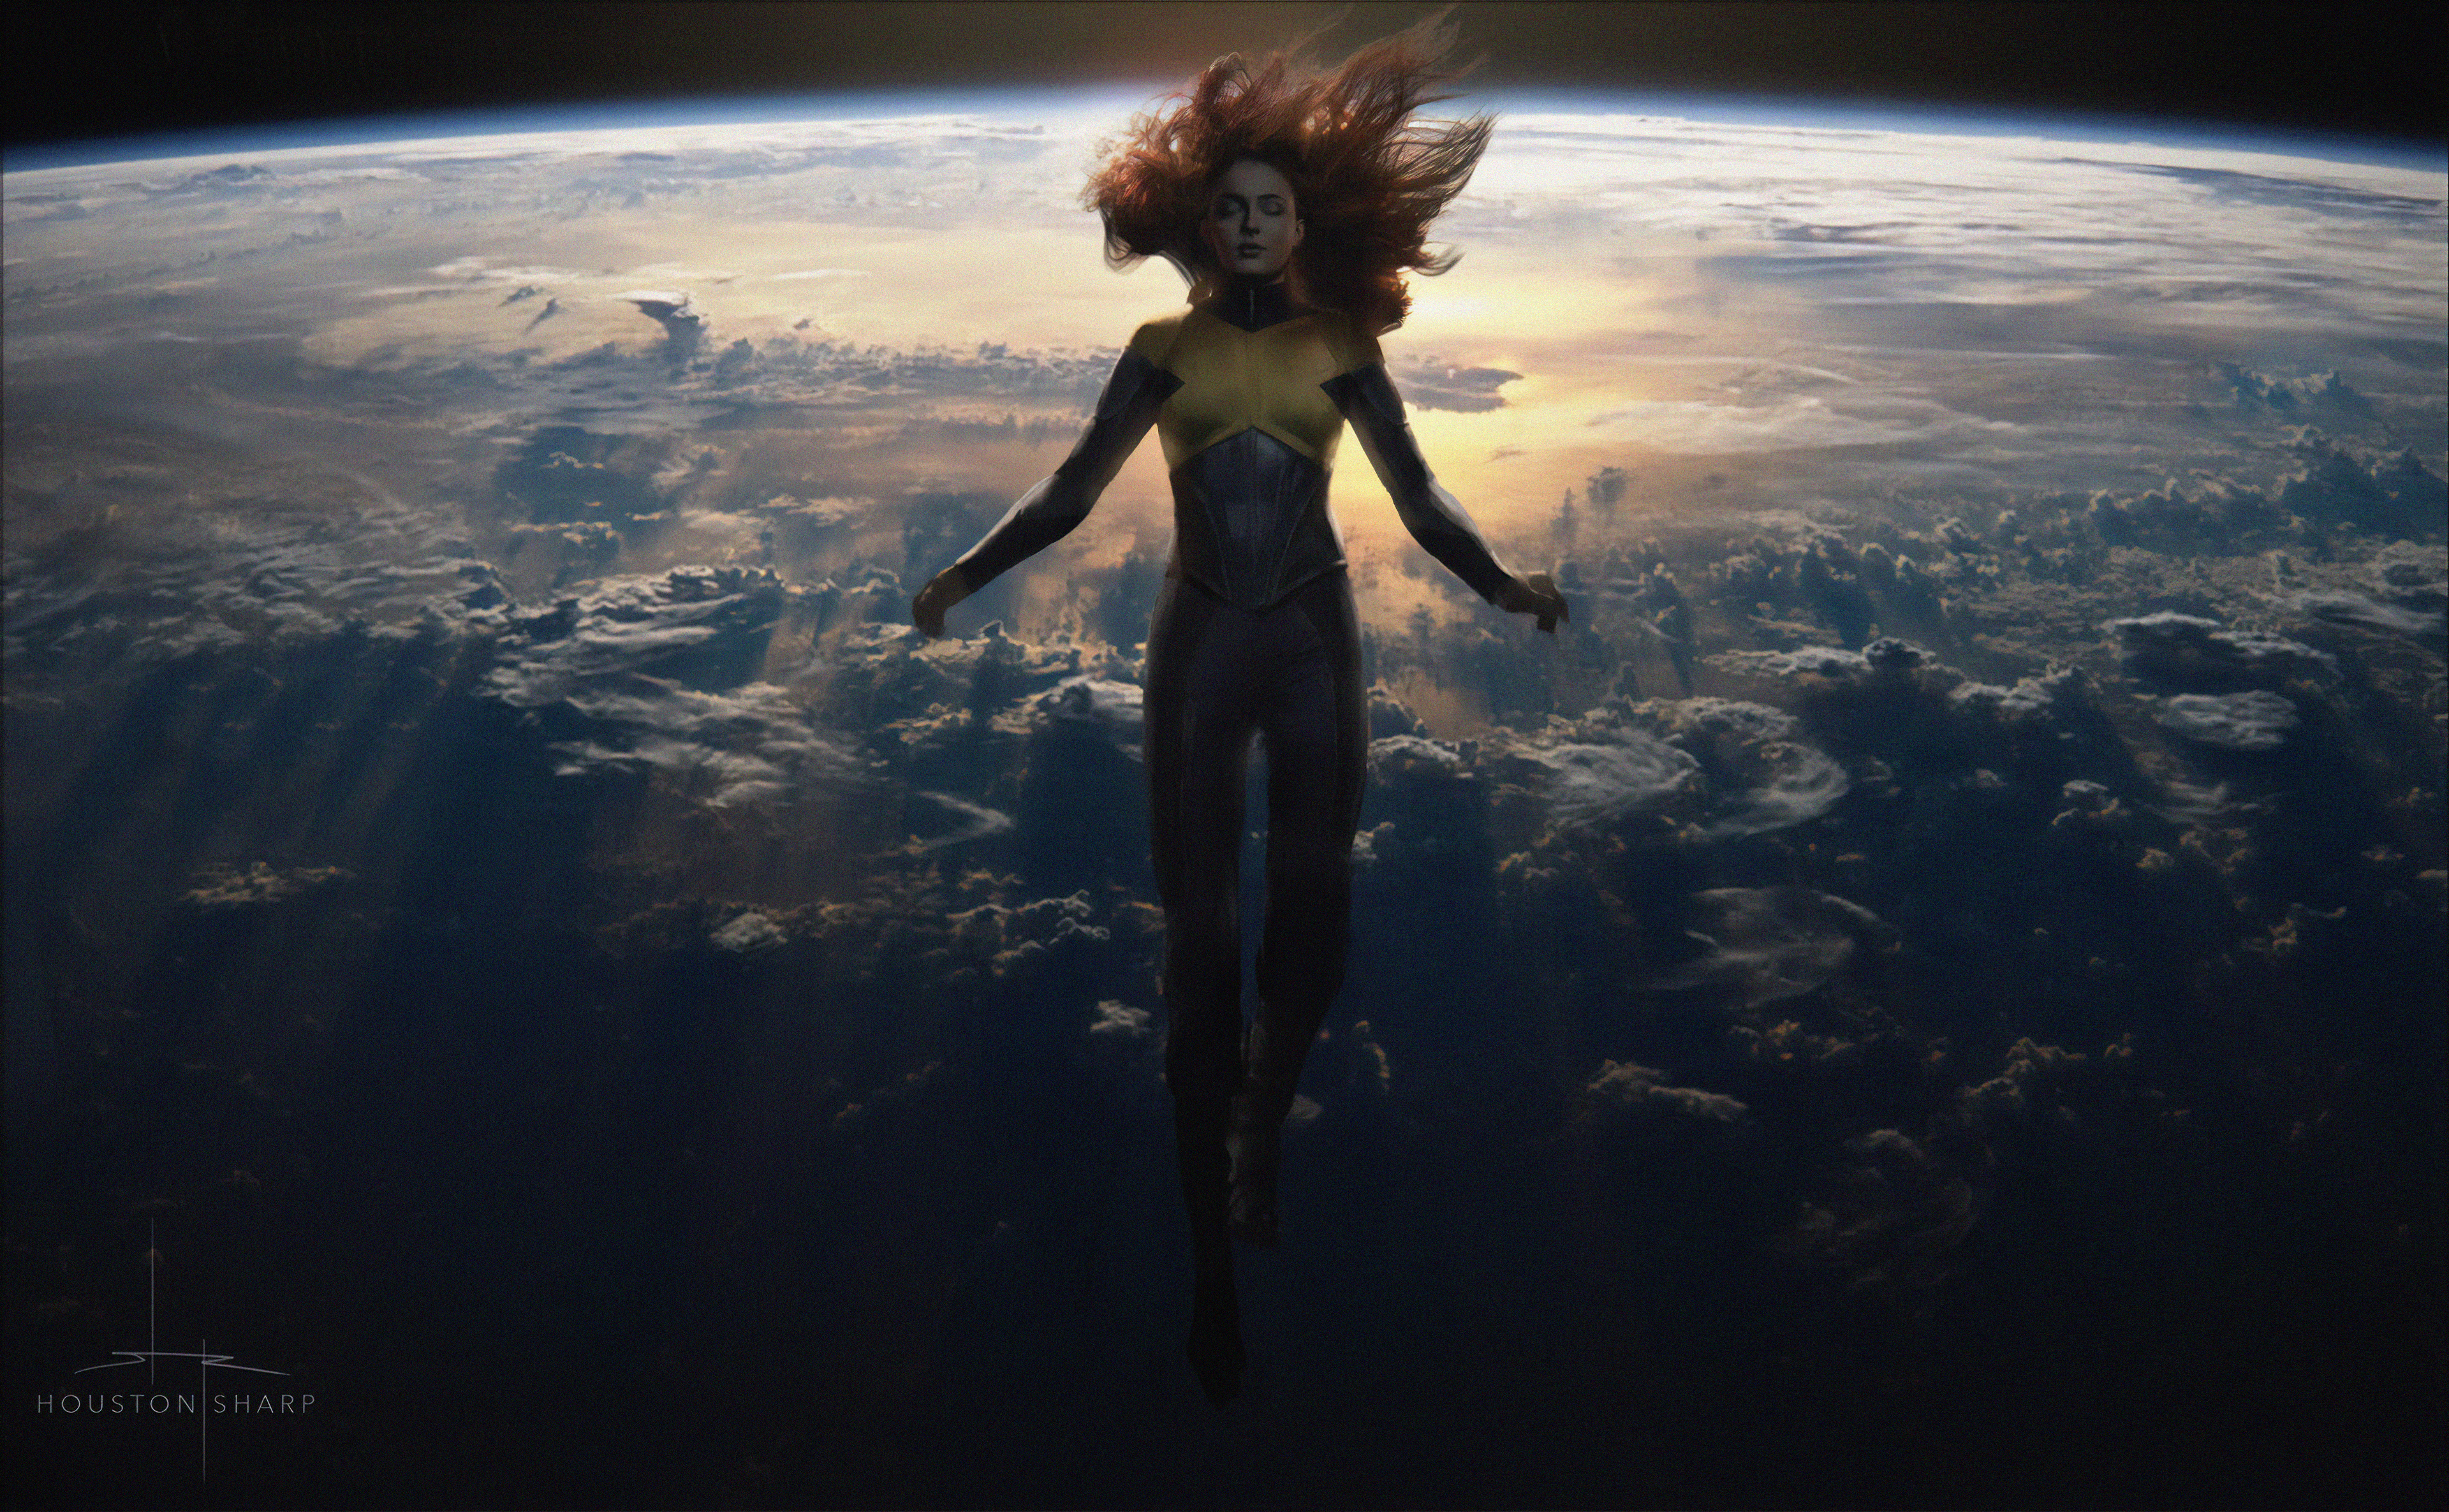 Sophie Turner X-Men Dark Phoenix Poster Wallpapers